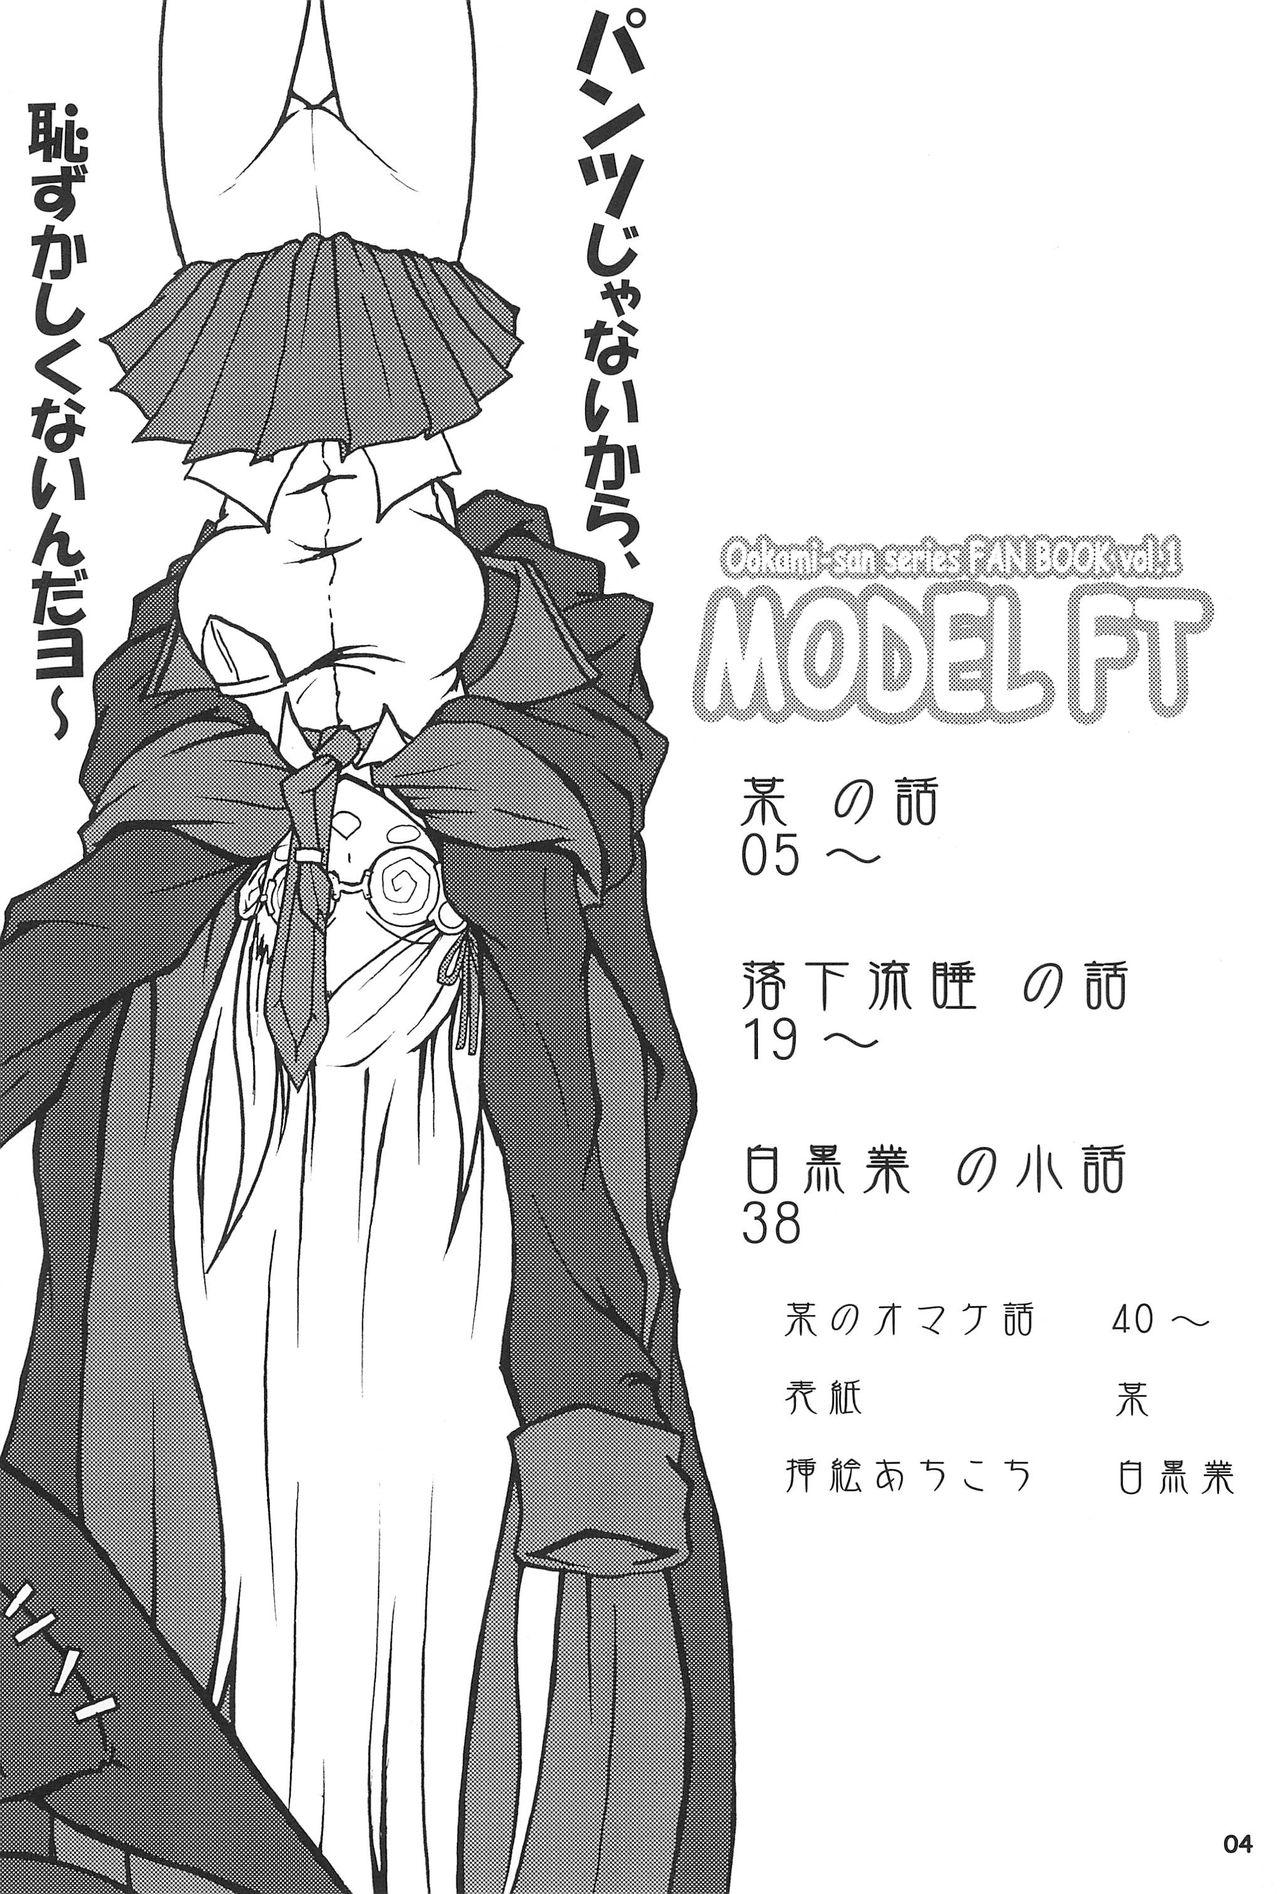 Hot MODEL FT - Ookami-san to shichinin no nakama-tachi 19yo - Page 4